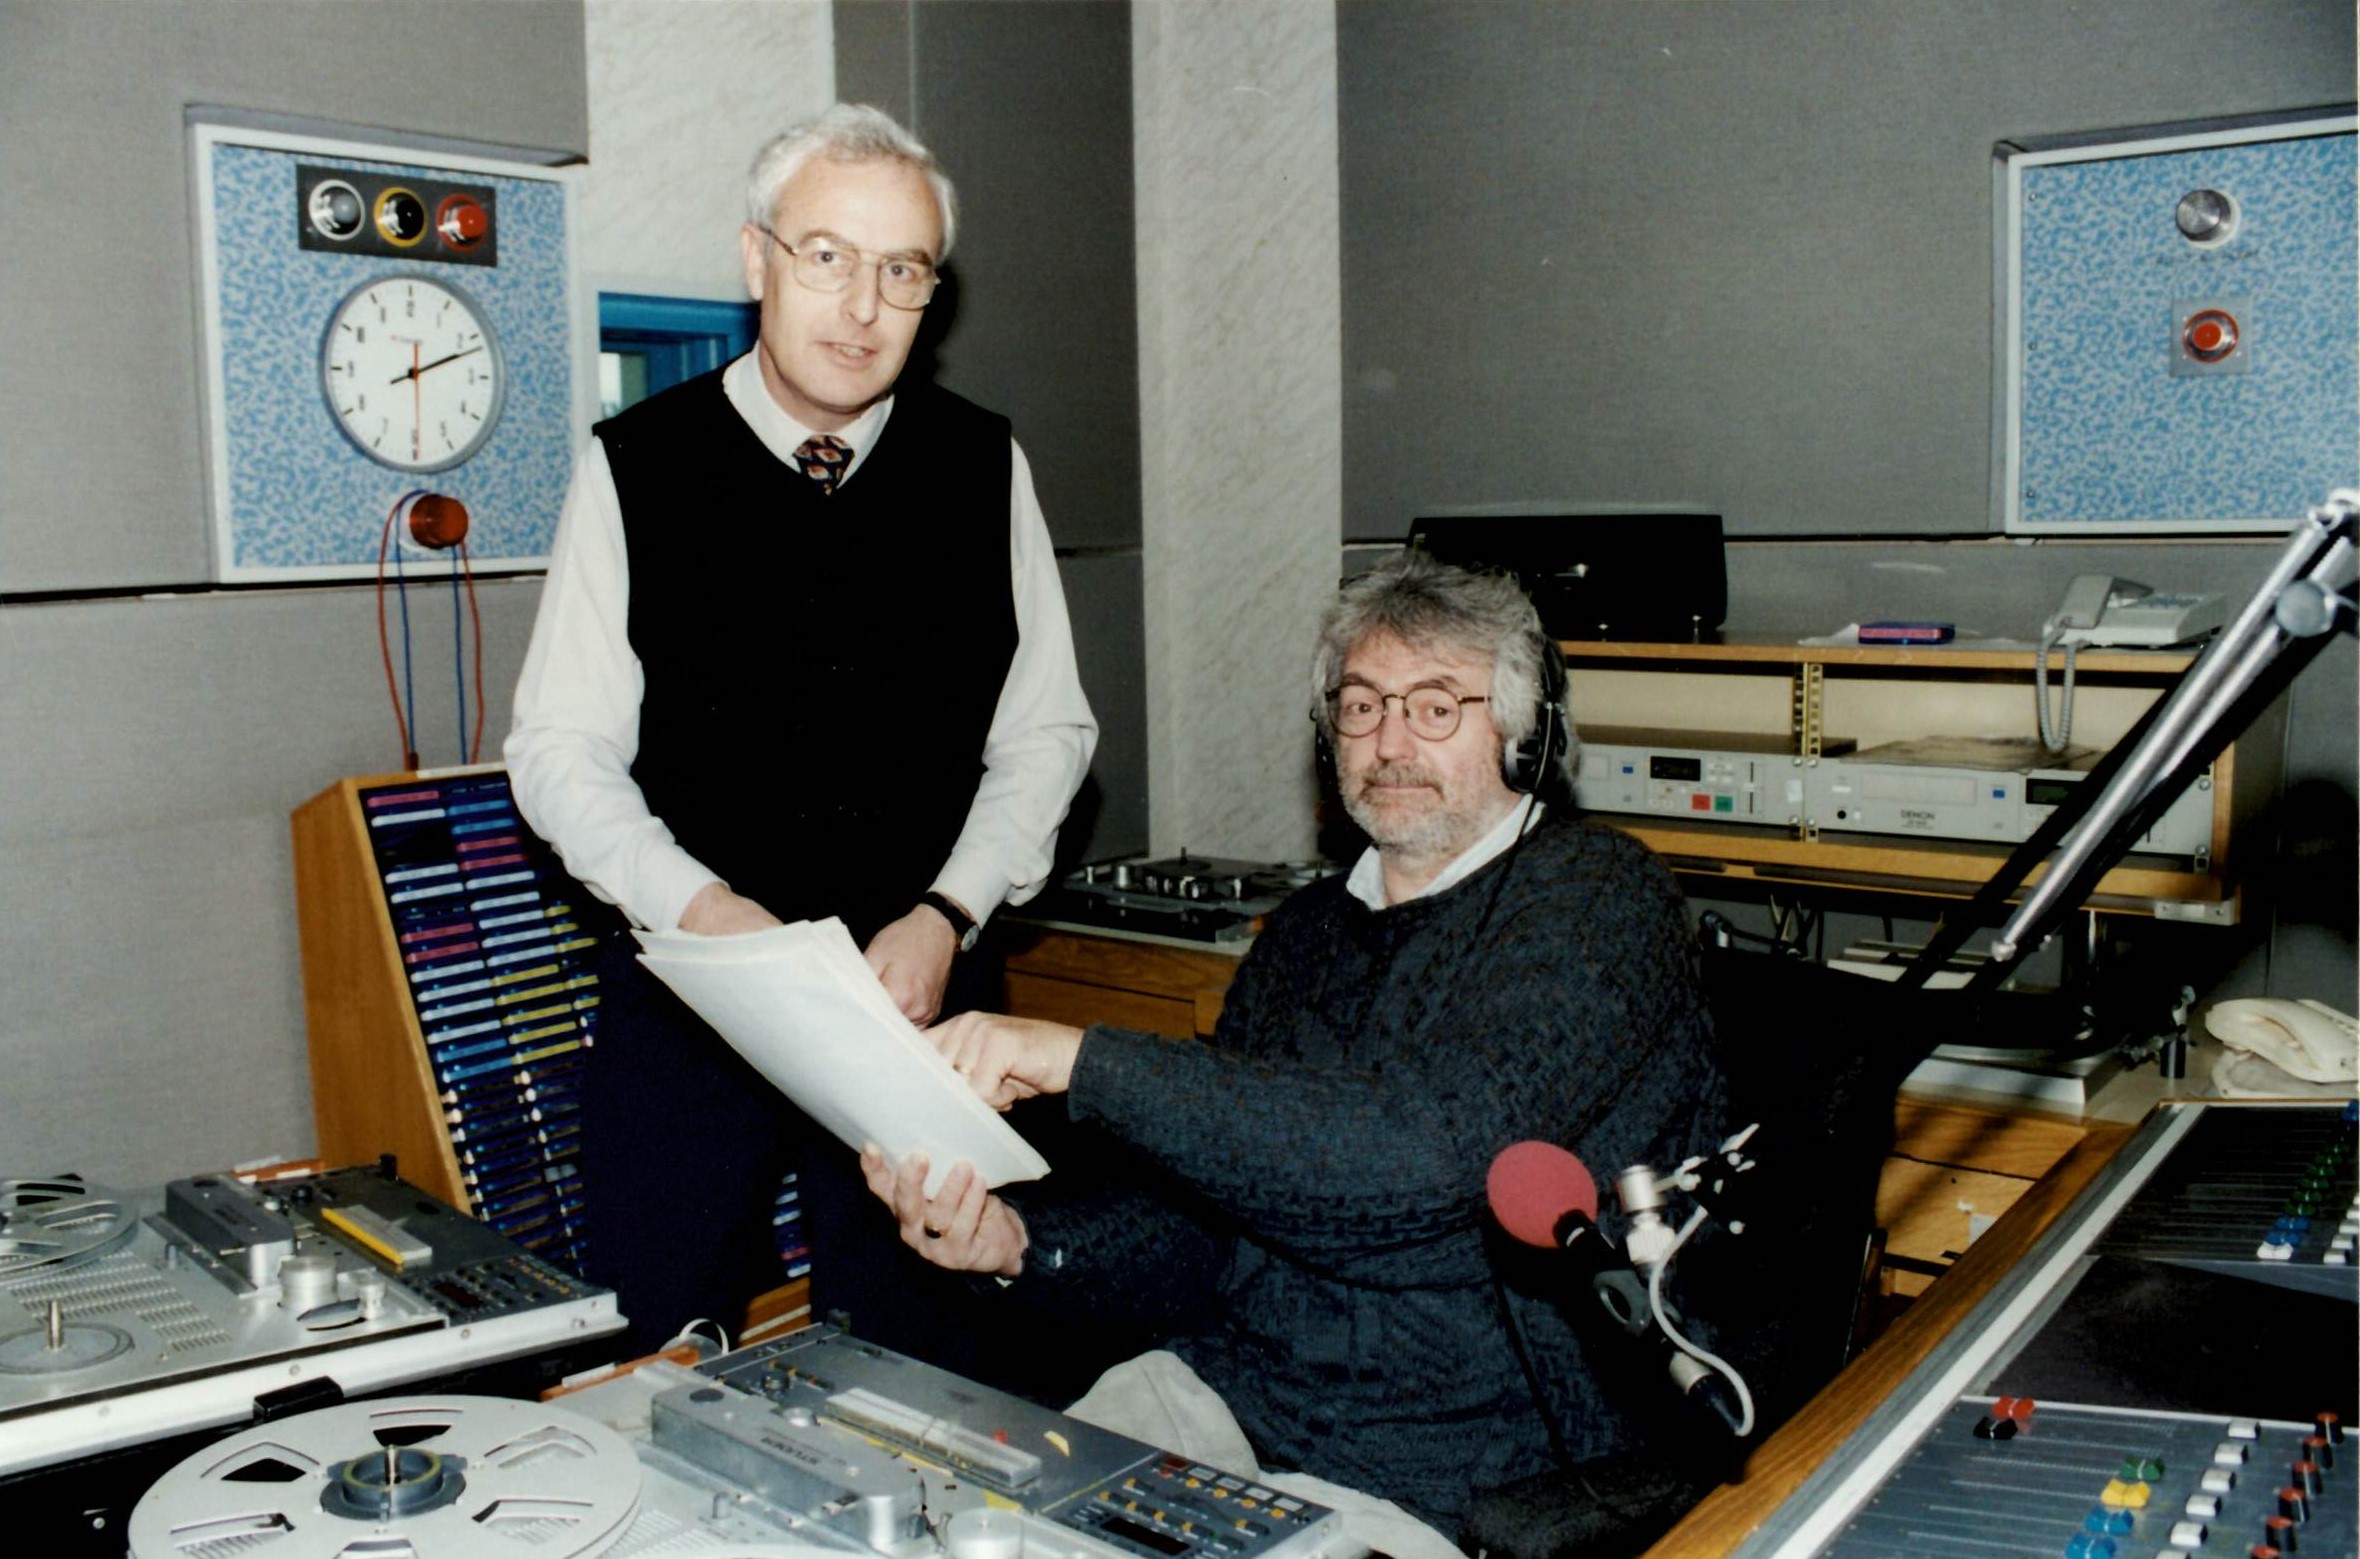 Mike George with Tony Wherry in radio studio